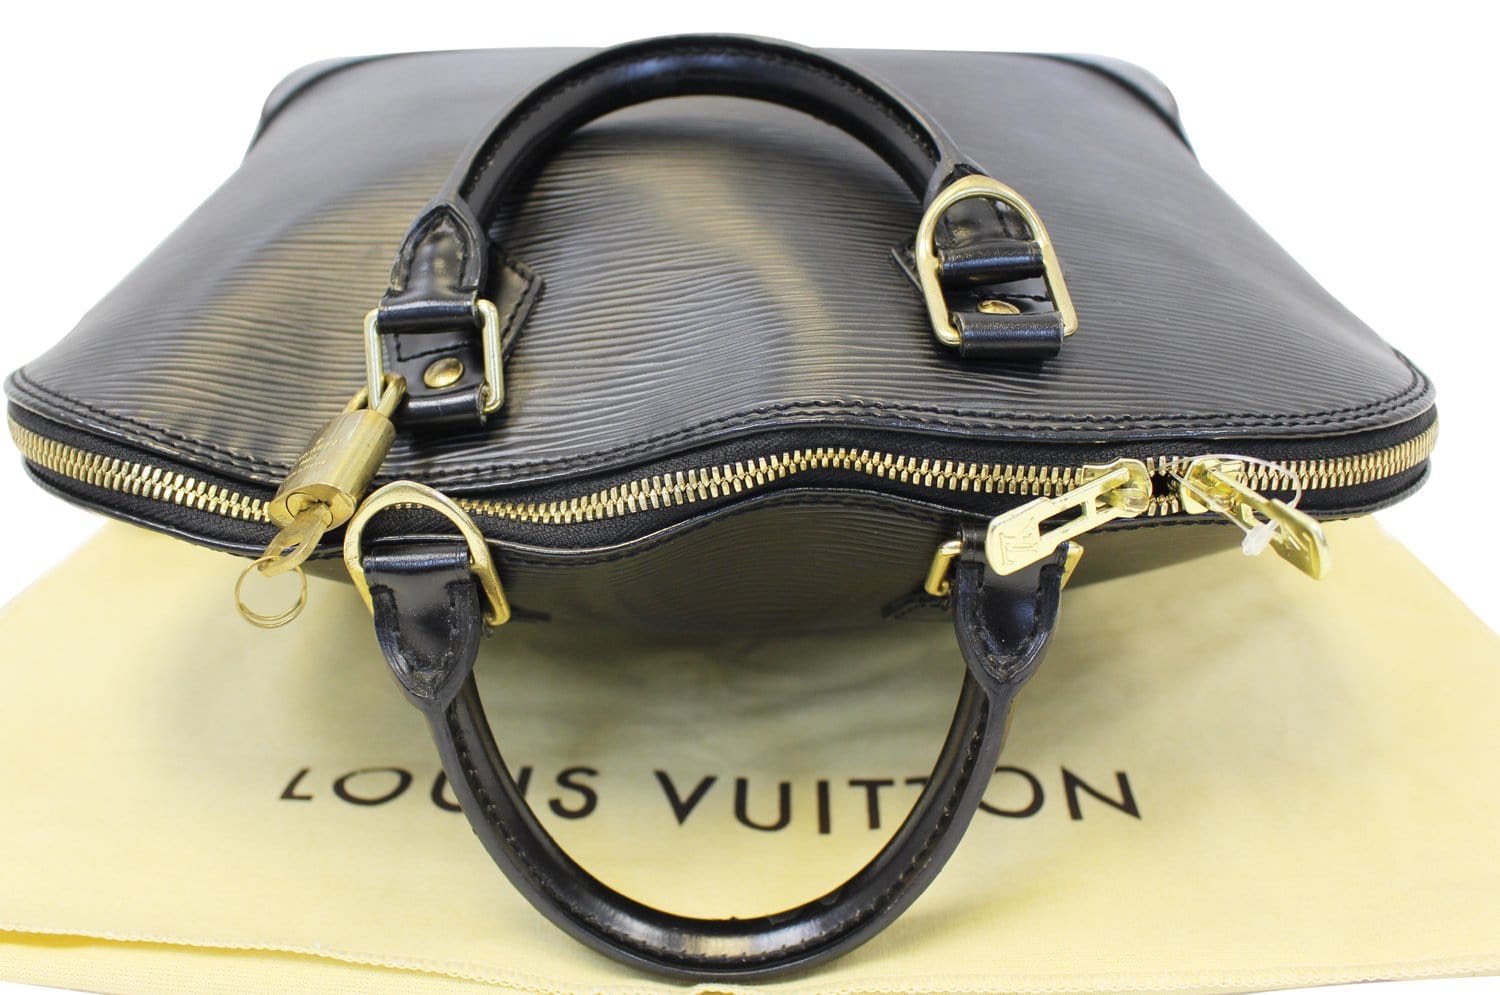 LOUIS VUITTON Epi Leather Alma PM Black Satchel Bag